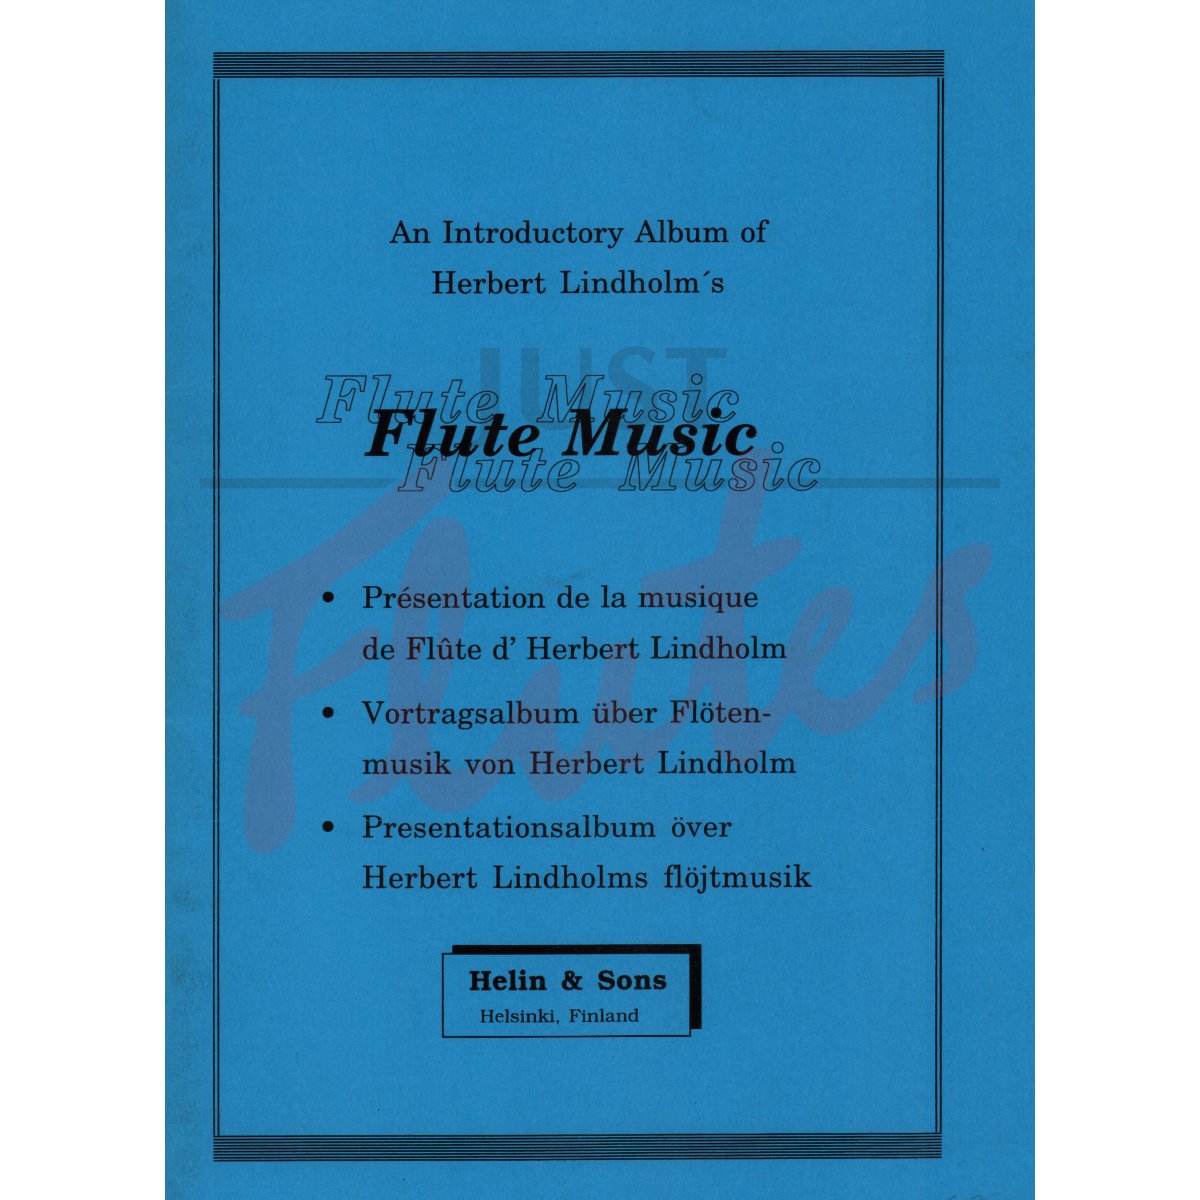 Introductory Album of Flute Music